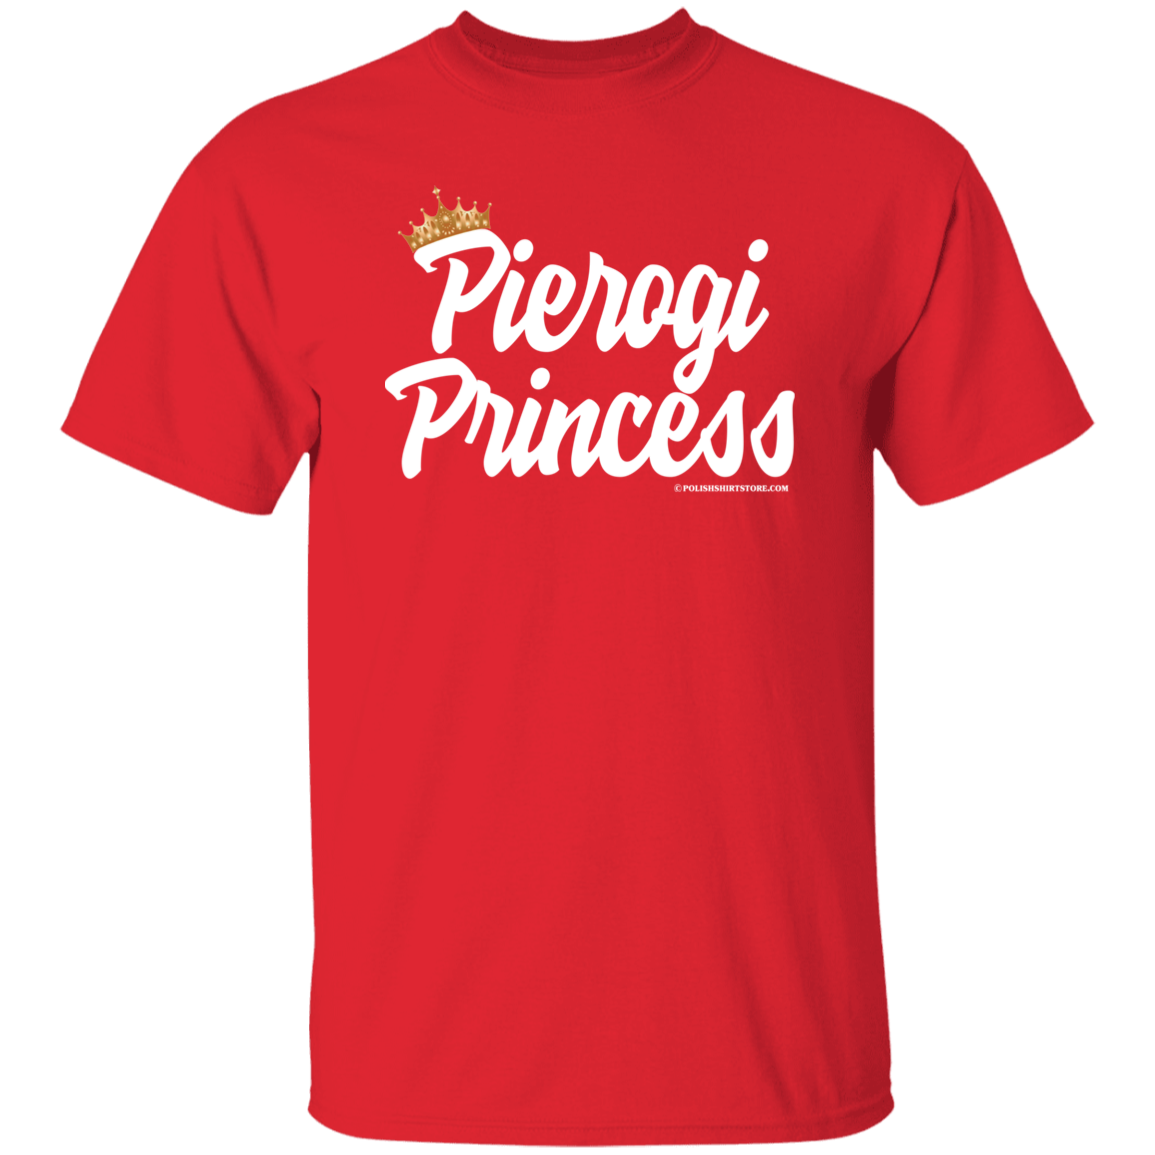 Pierogi Princess T-Shirt Apparel CustomCat G500 5.3 oz. T-Shirt Red S